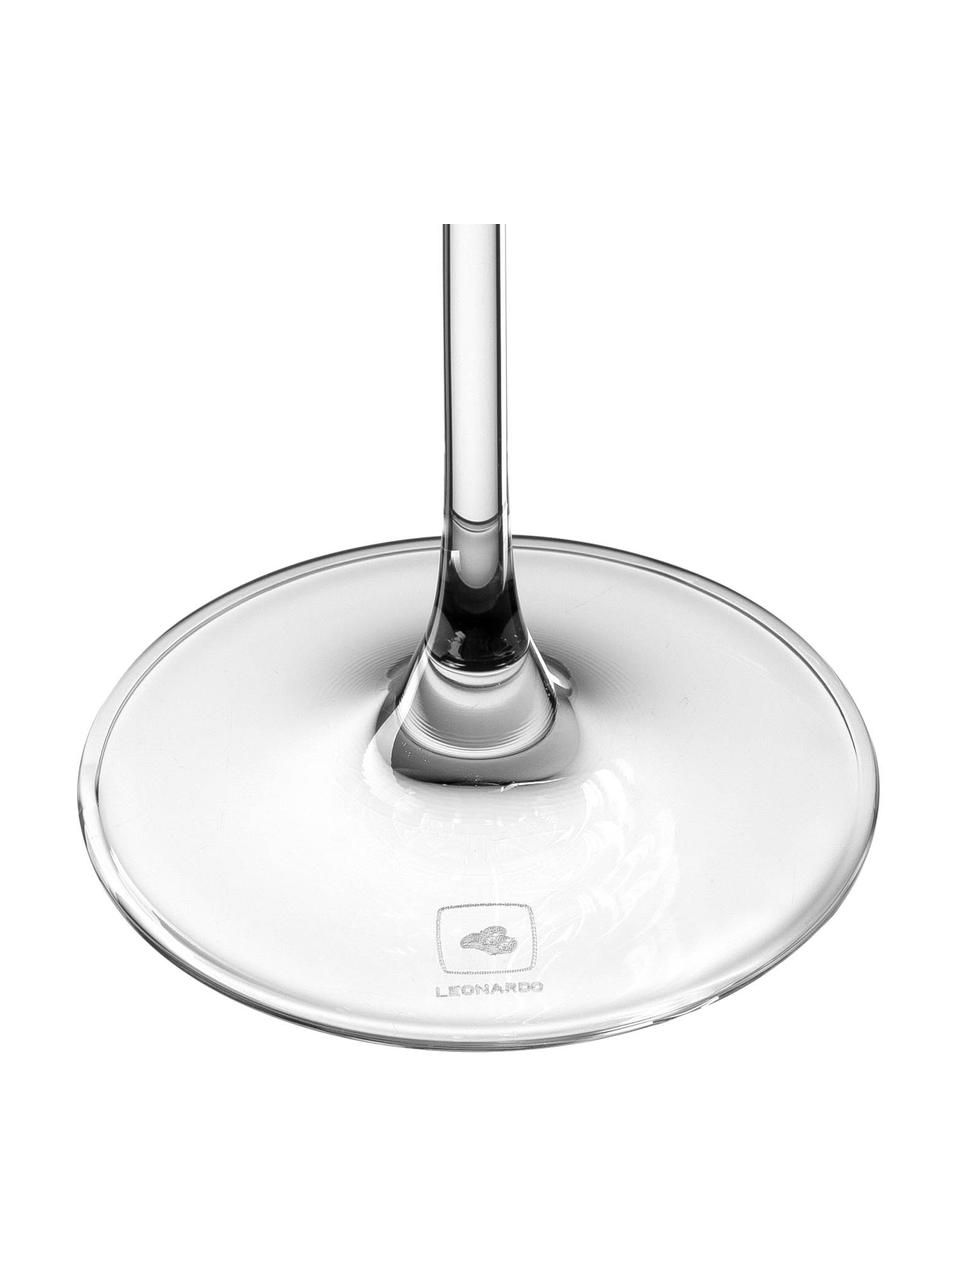 Witte wijnglas Puccini, 6 stuks, Teqton®-glas, Transparant, Ø 8 x H 23 cm, 400 ml